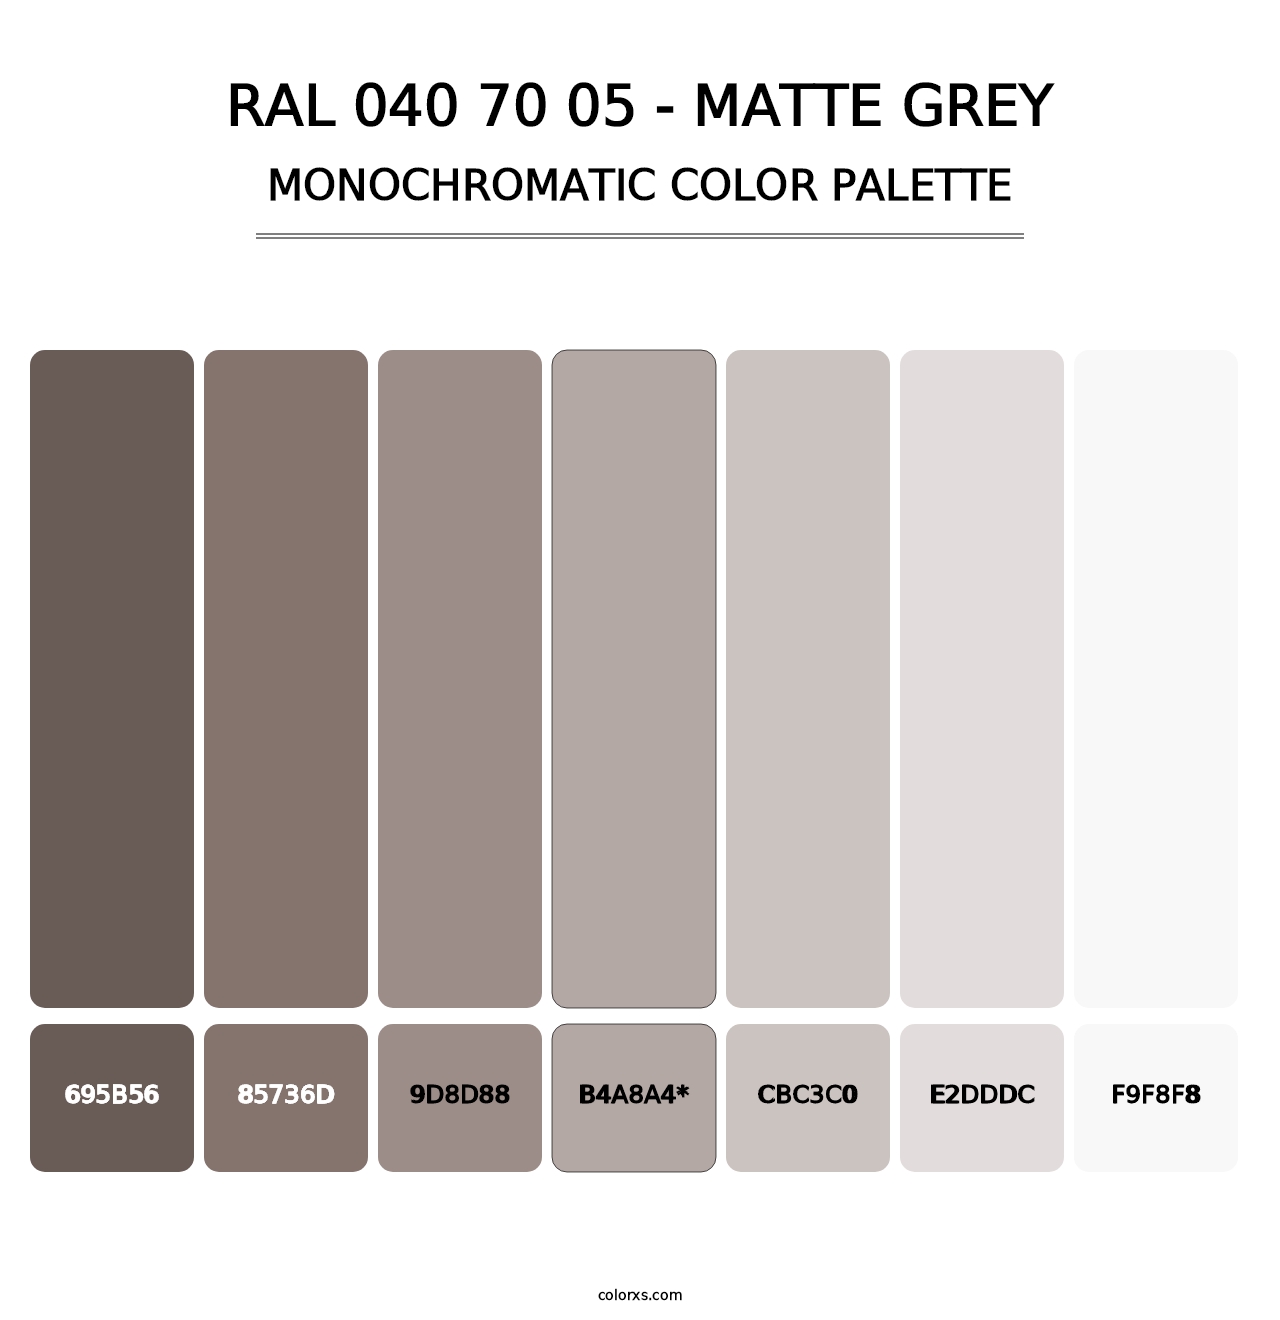 RAL 040 70 05 - Matte Grey - Monochromatic Color Palette